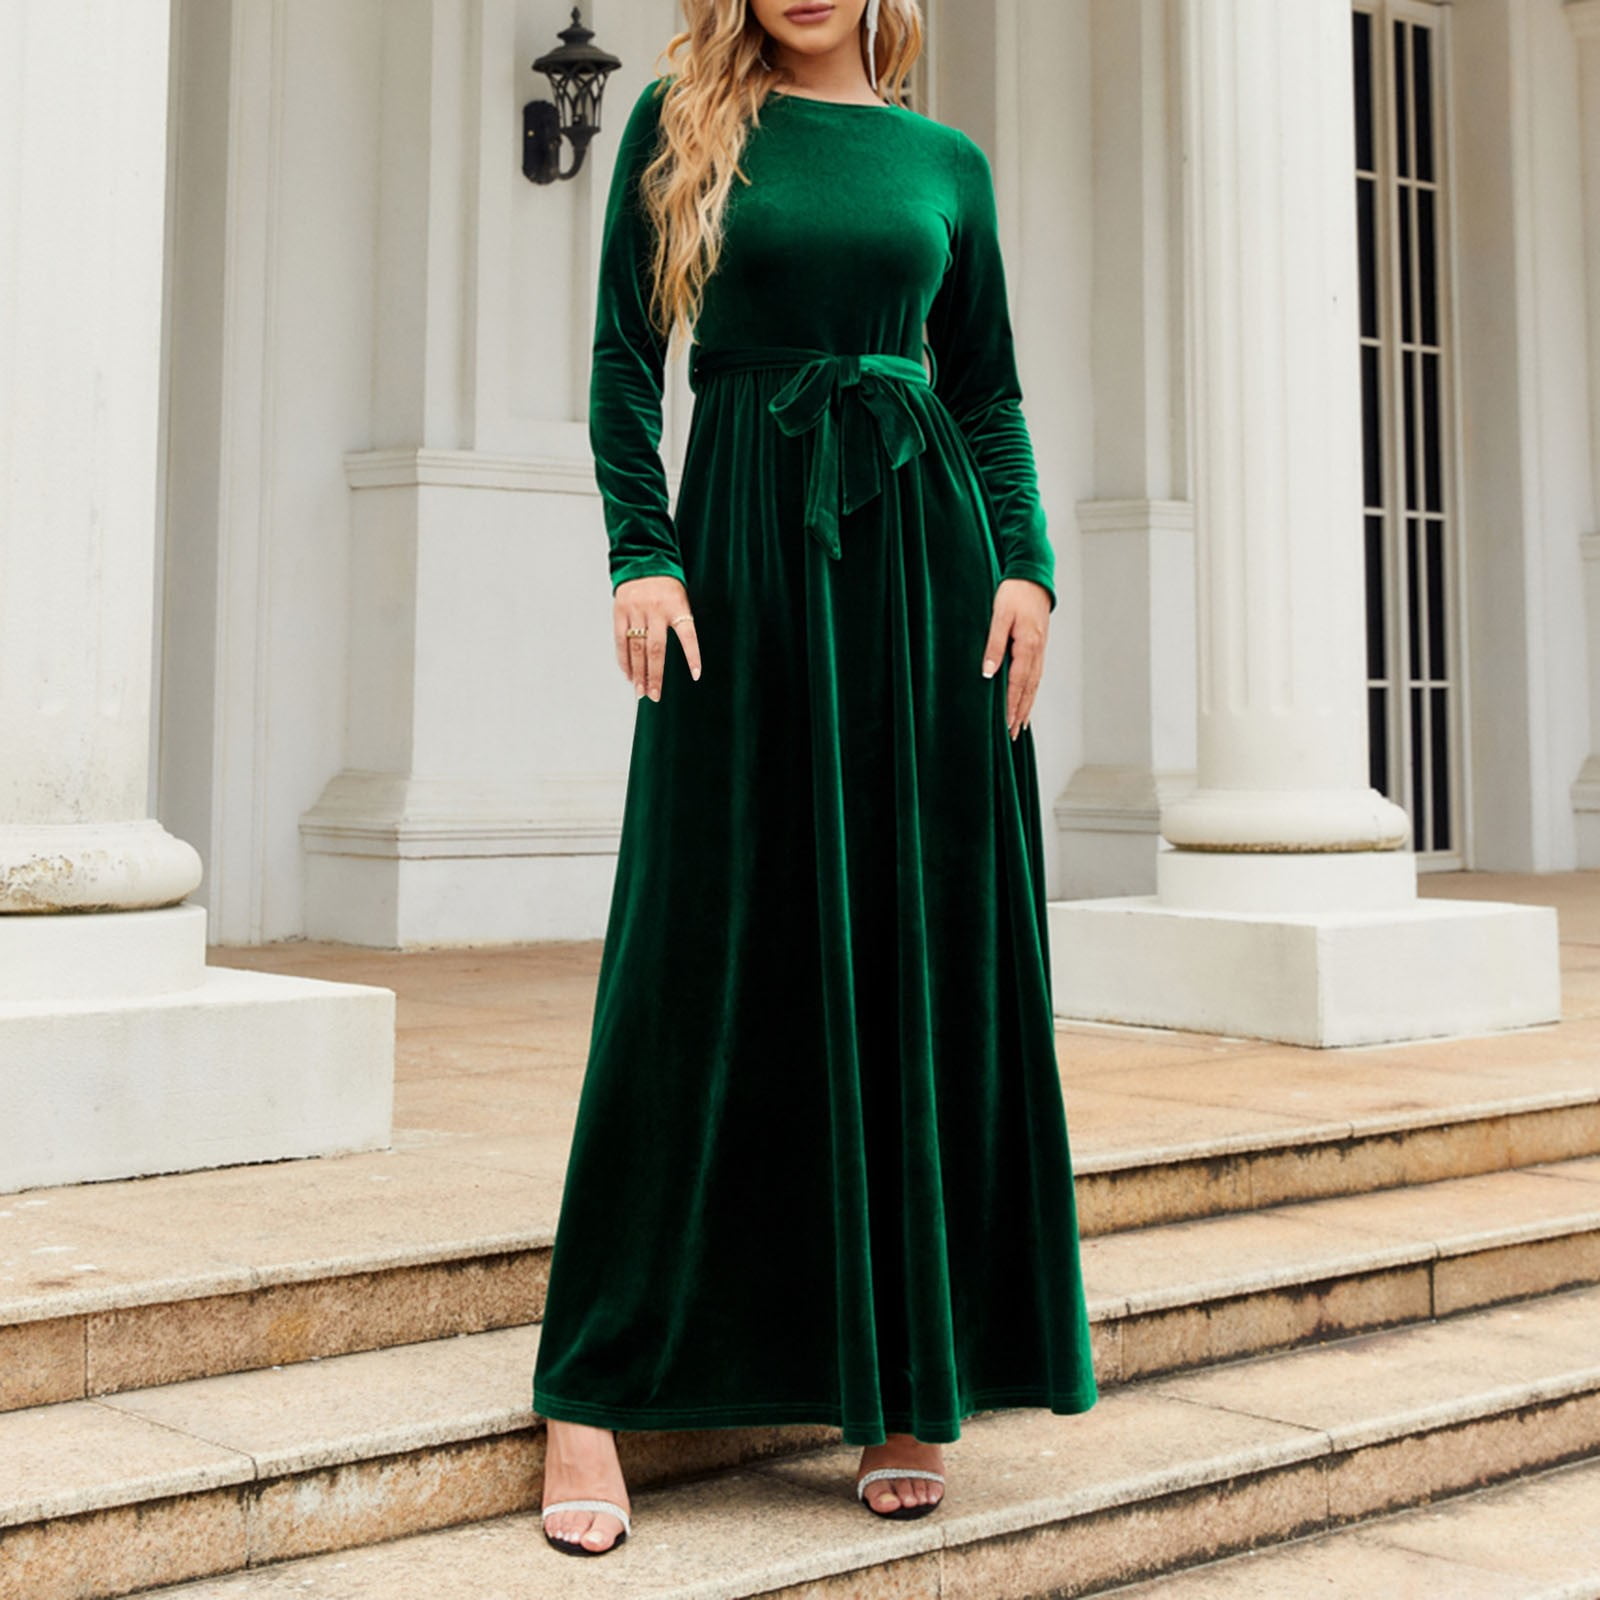  Women's Casual Plaid Long Sleeve Empire Waist Dress Elegant  Full Length Maxi Dresses Cocktail Evening Party Dress : Sports & Outdoors